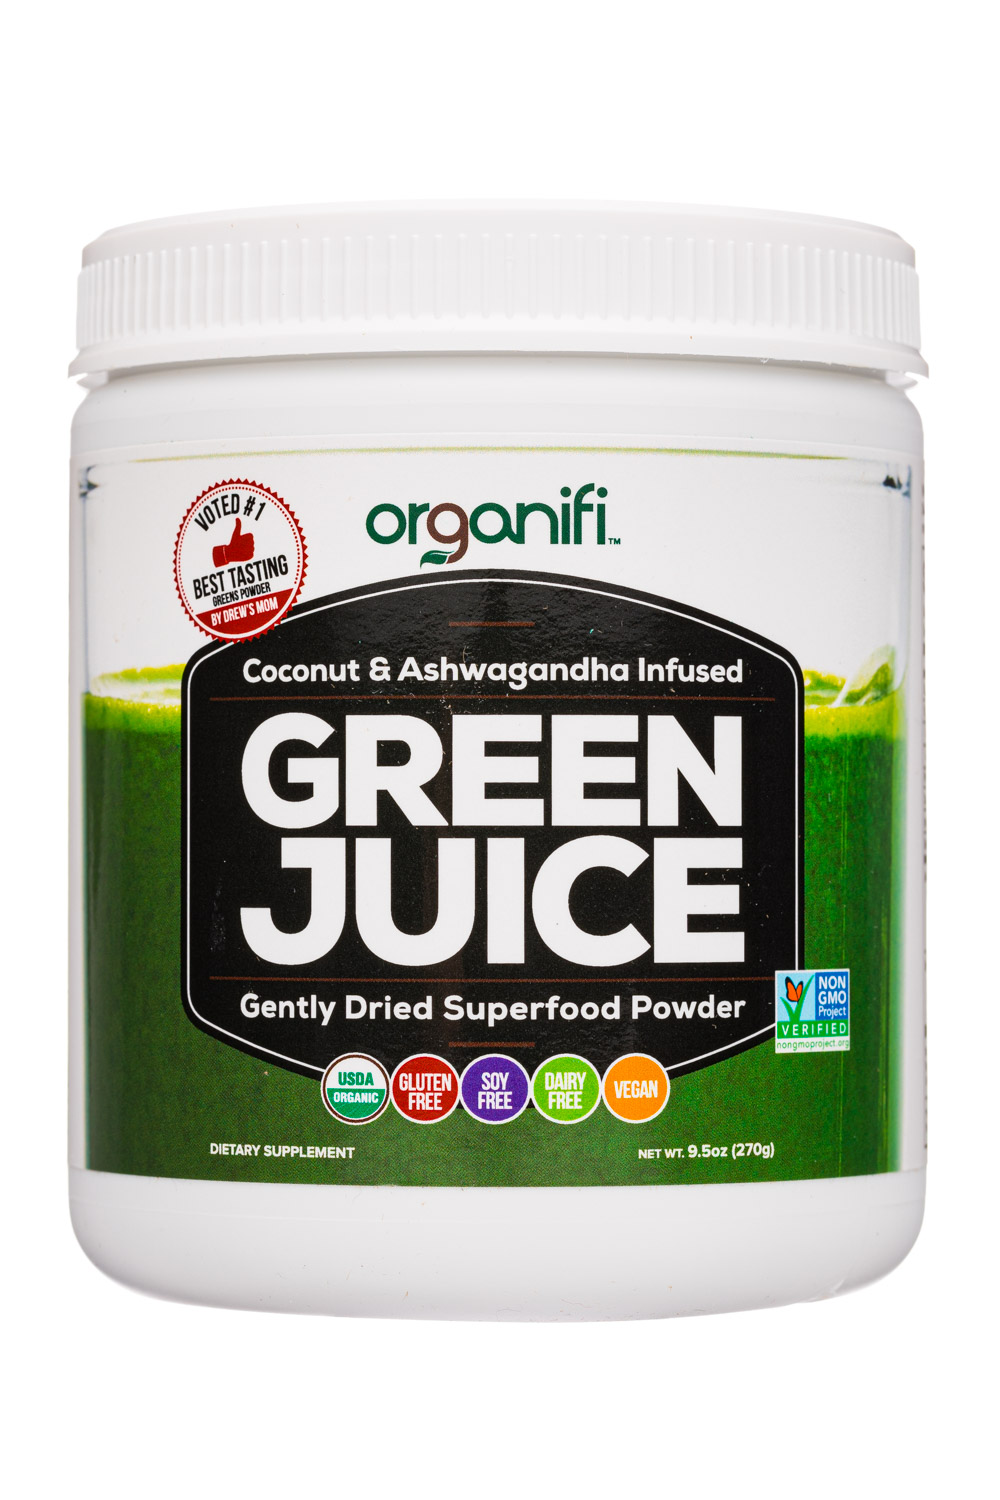 Organifi Green Juice - Pinterest for Dummies